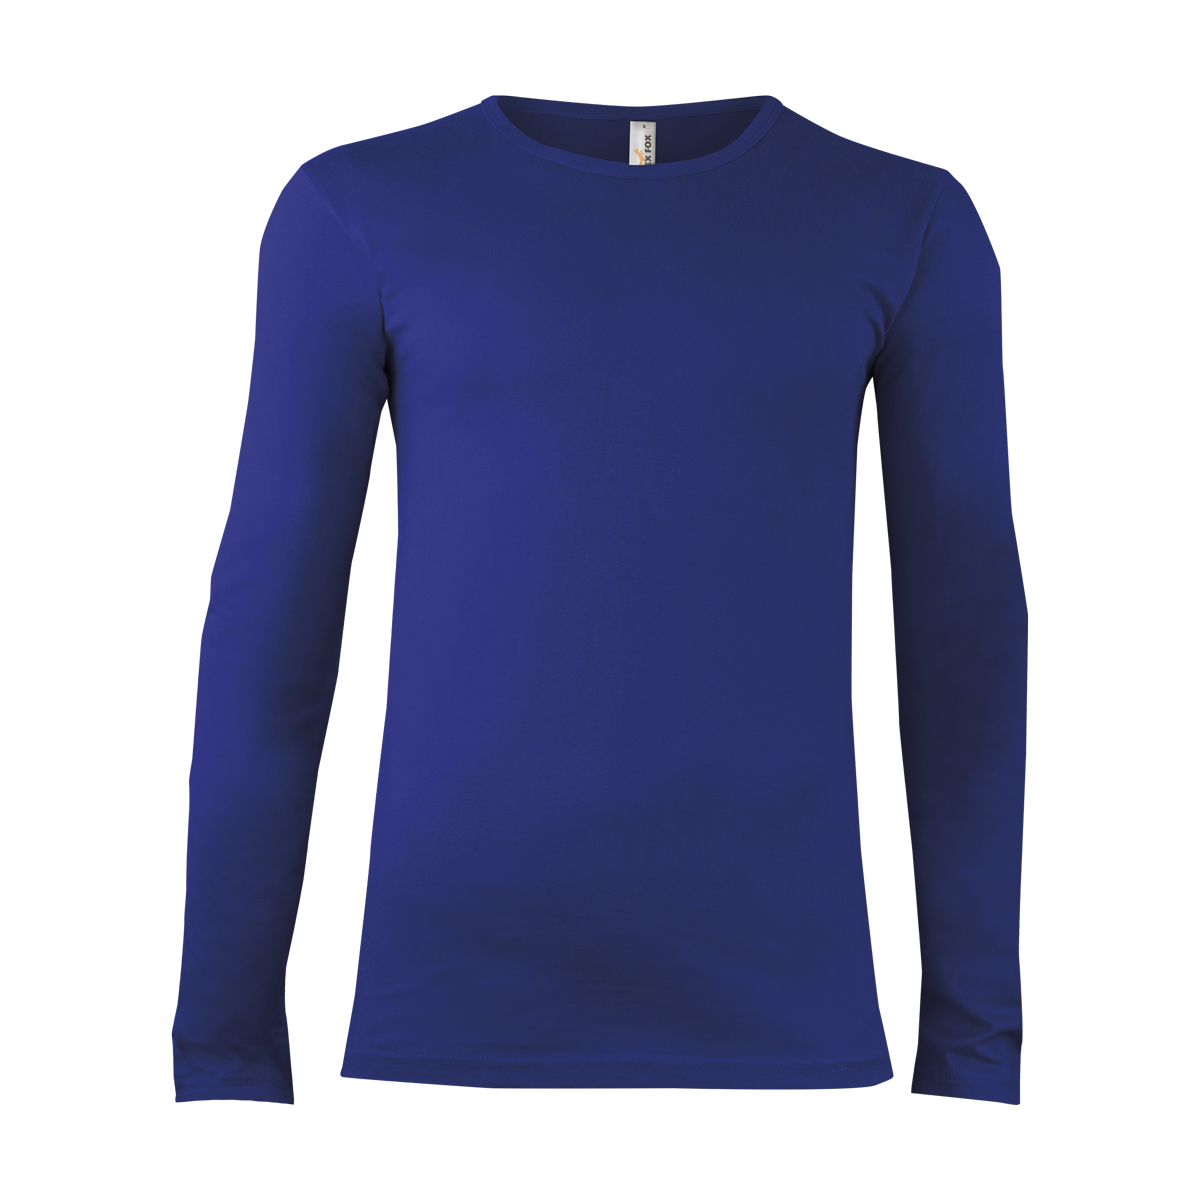 Tričko s dlouhým rukávem Alex Fox Long 150 - modré, XXL